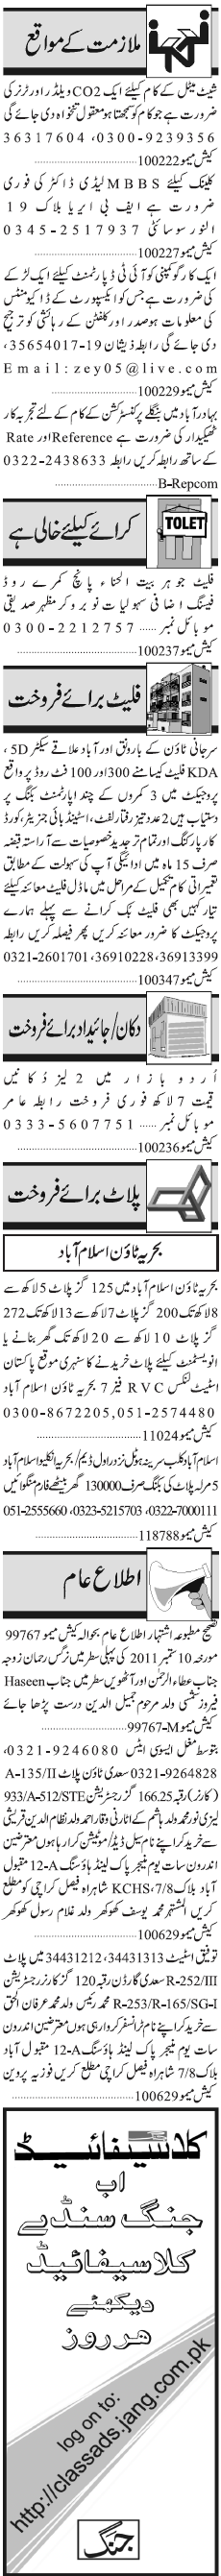 Job in Karachi - Classified 2